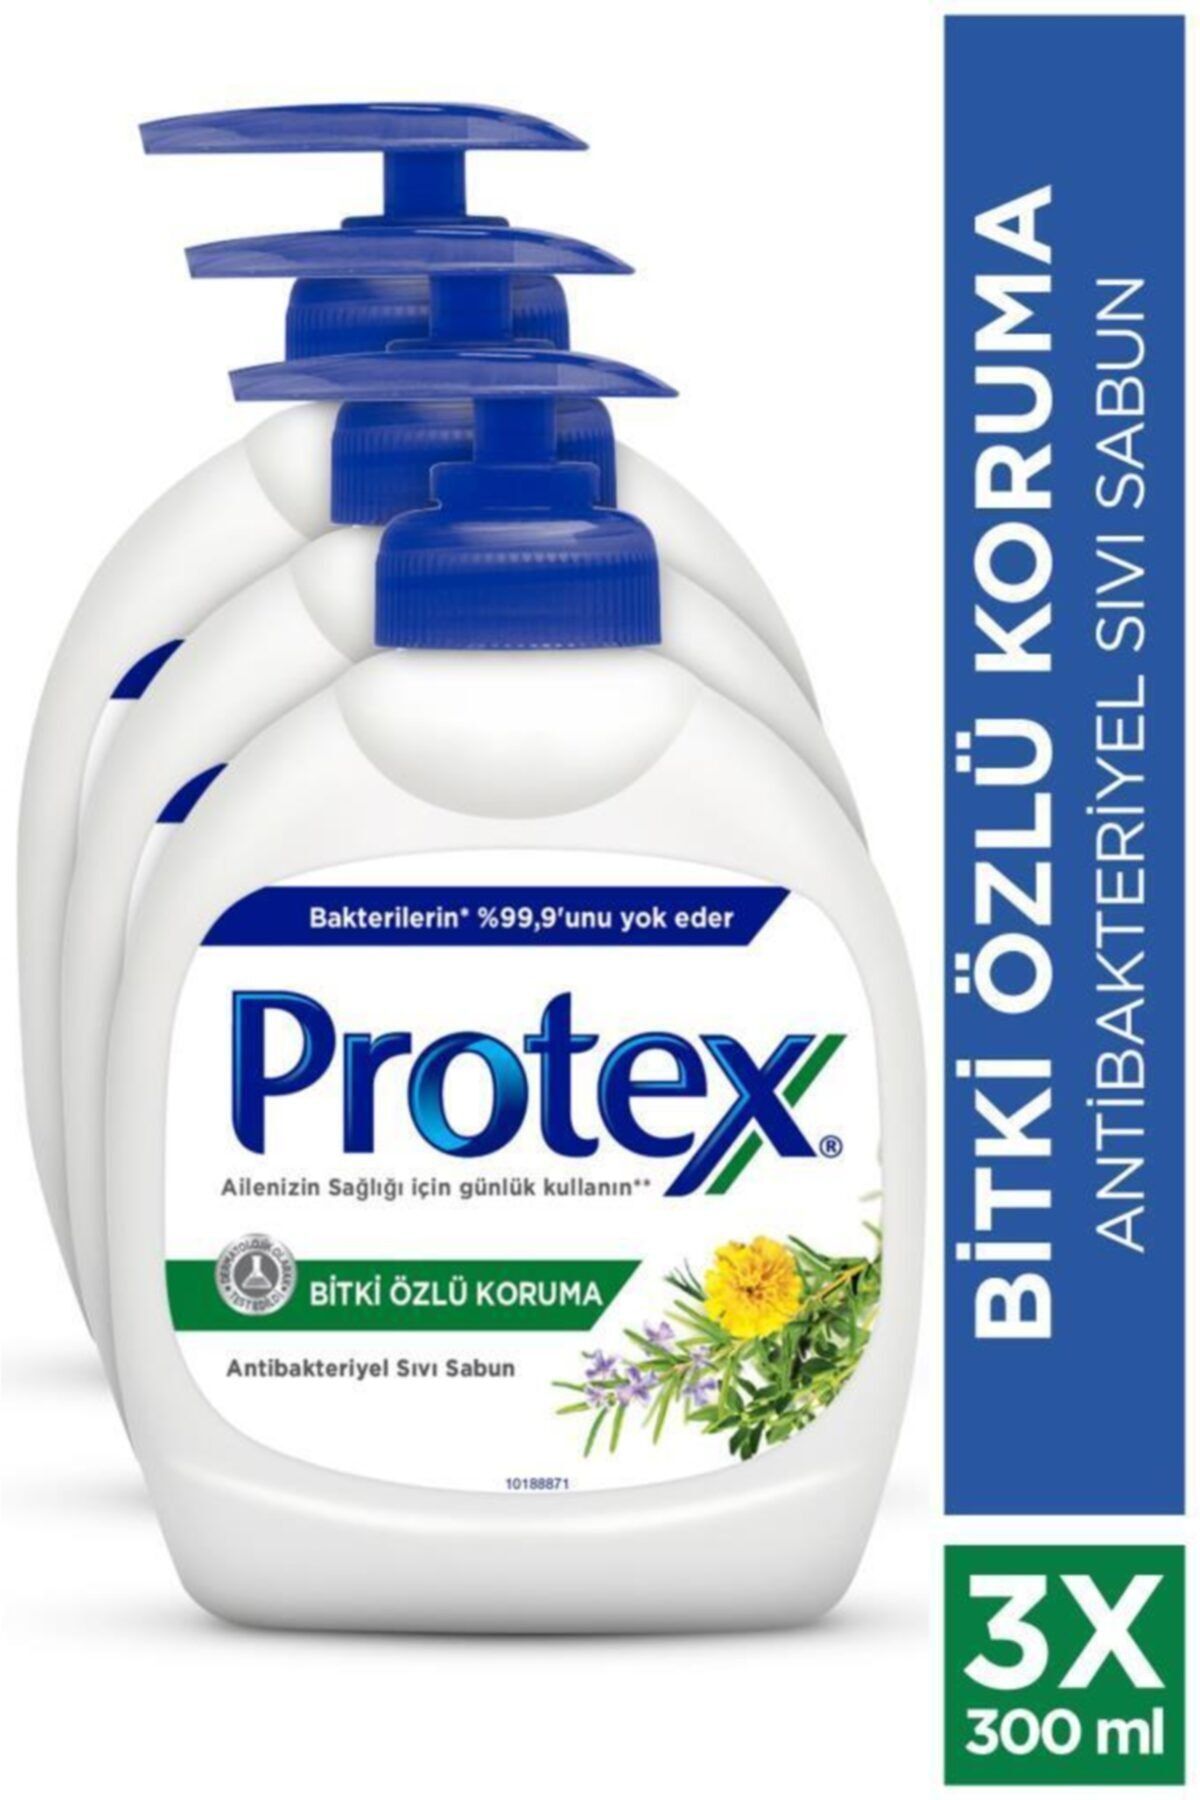 Protex Bitki Özlü Koruma Sıvı Sabun 300 ml x 3 Adet